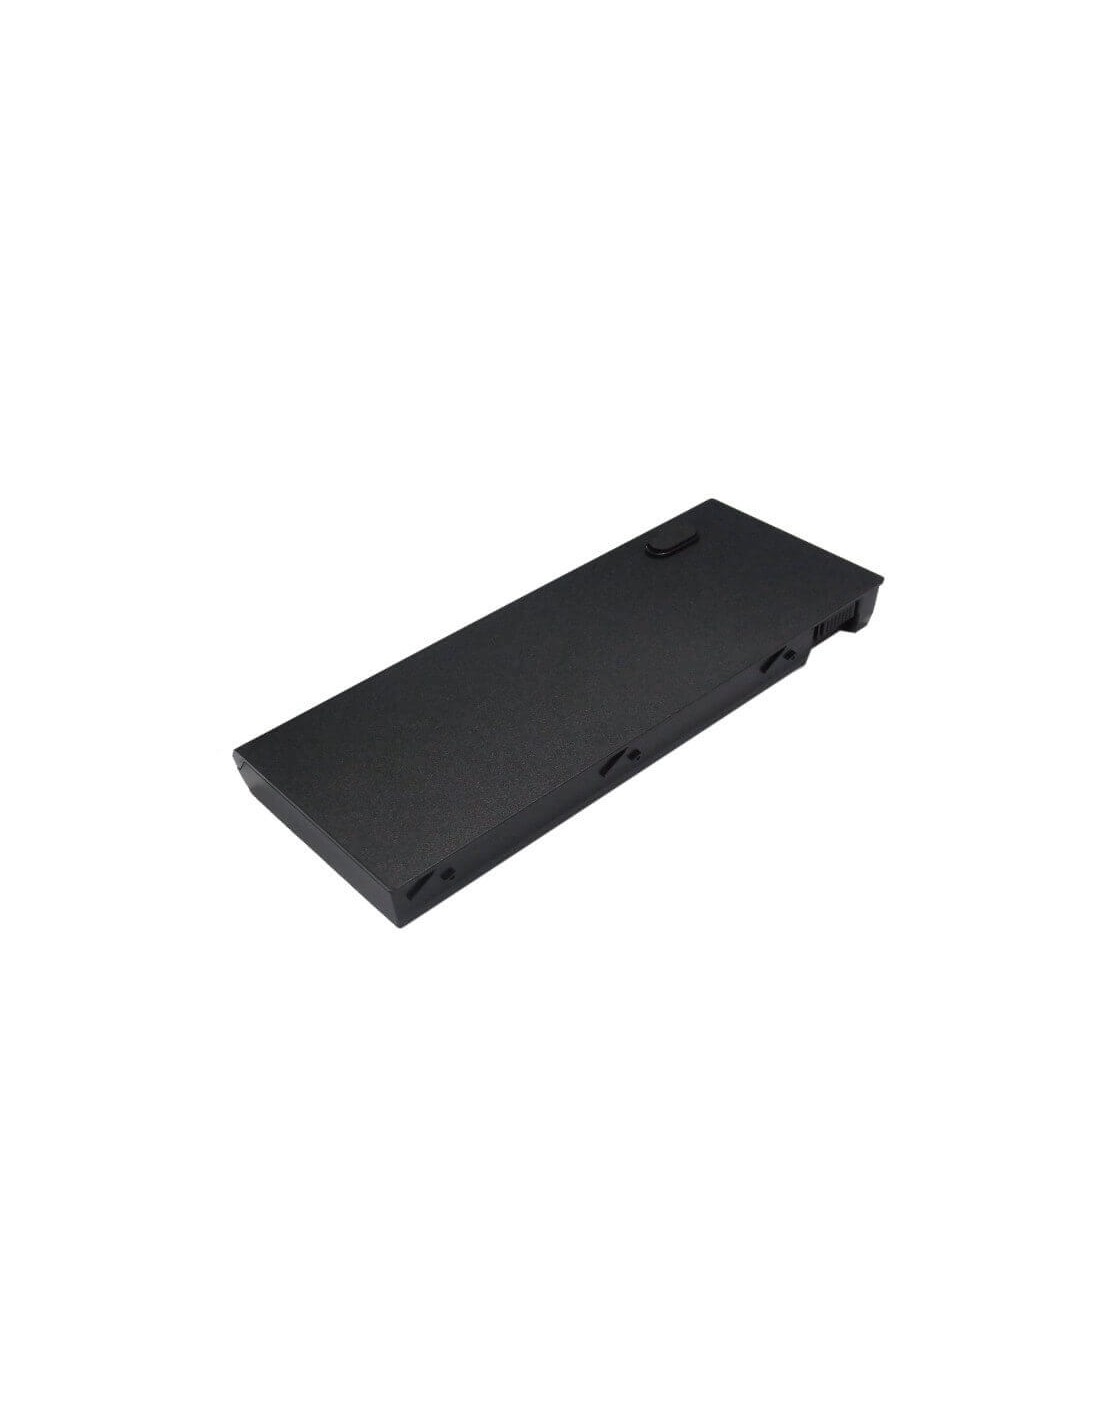 Black Battery for Acer Aspire 1350, Aspire 1350lc, Aspire 1350lce 14.8V, 4400mAh - 65.12Wh